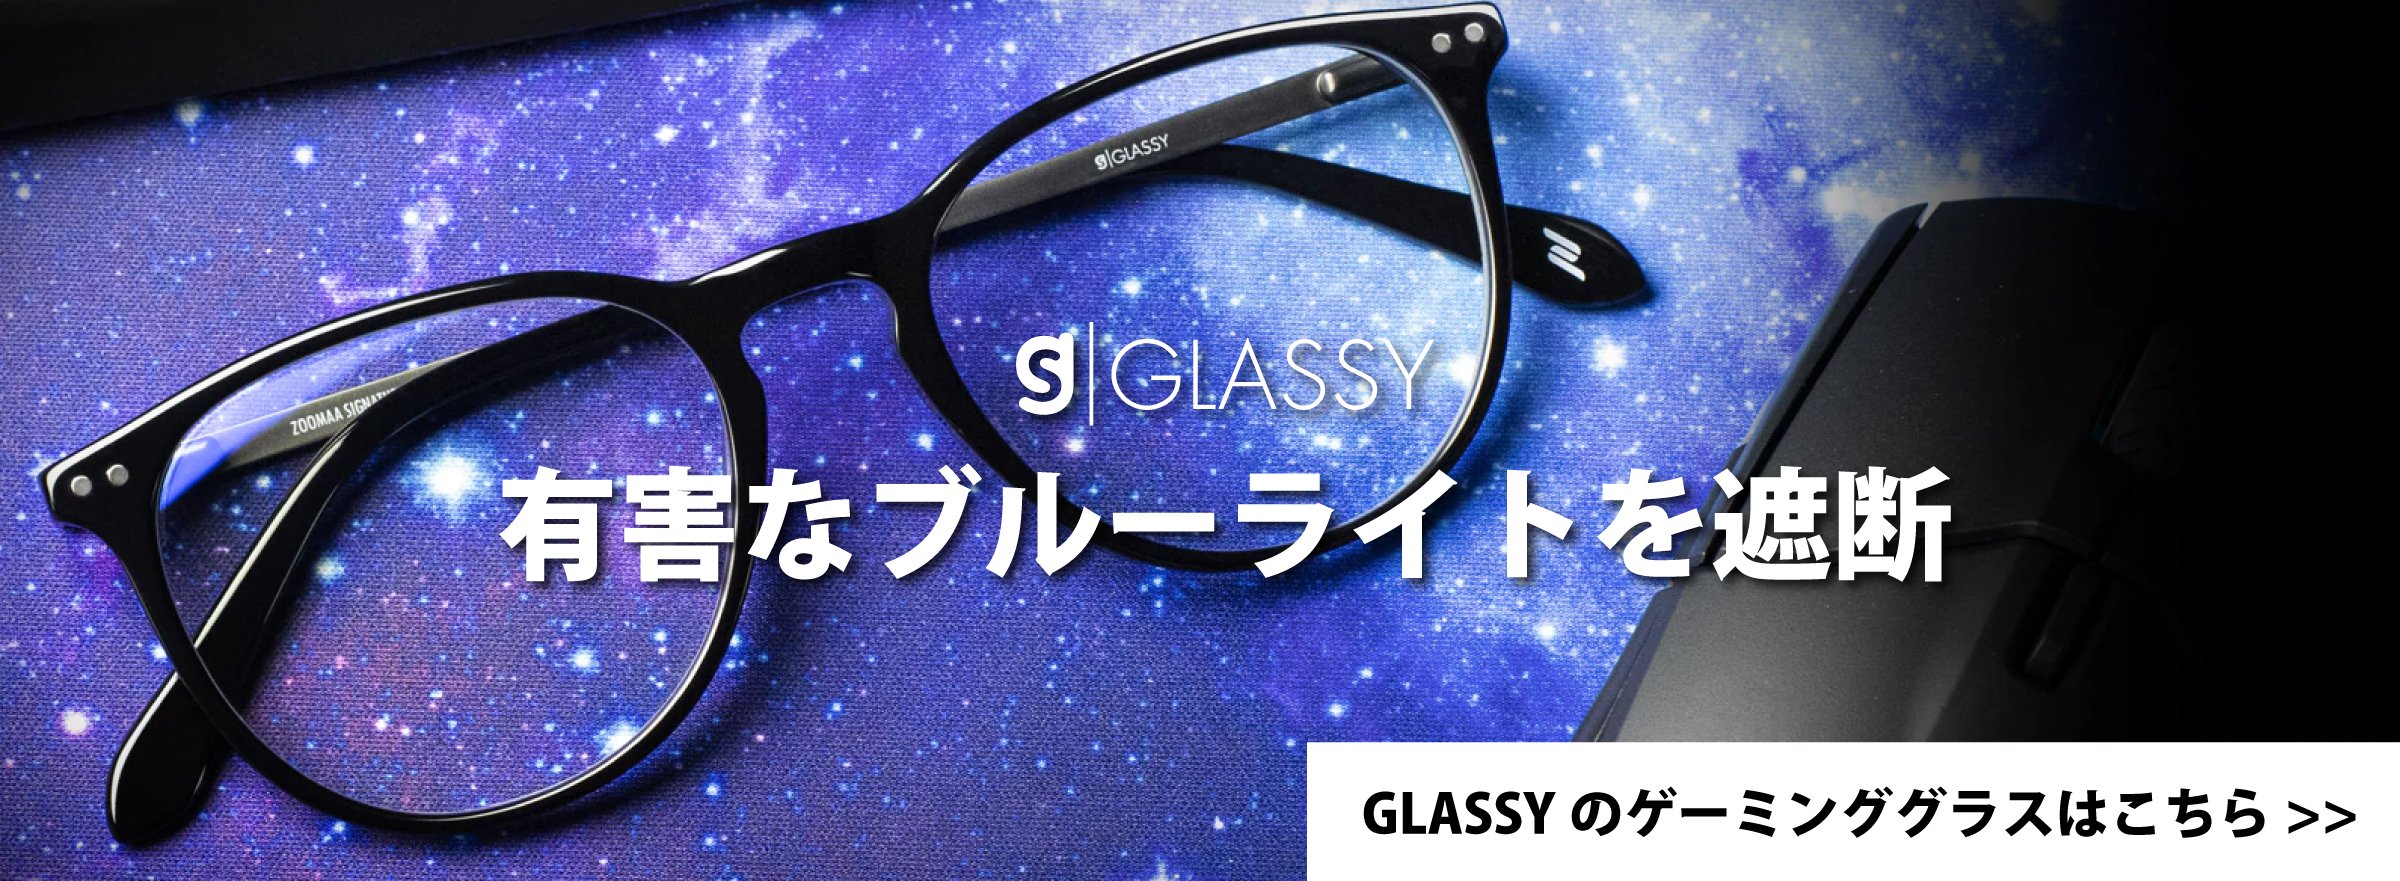 GLASSYのPCメガネの通販